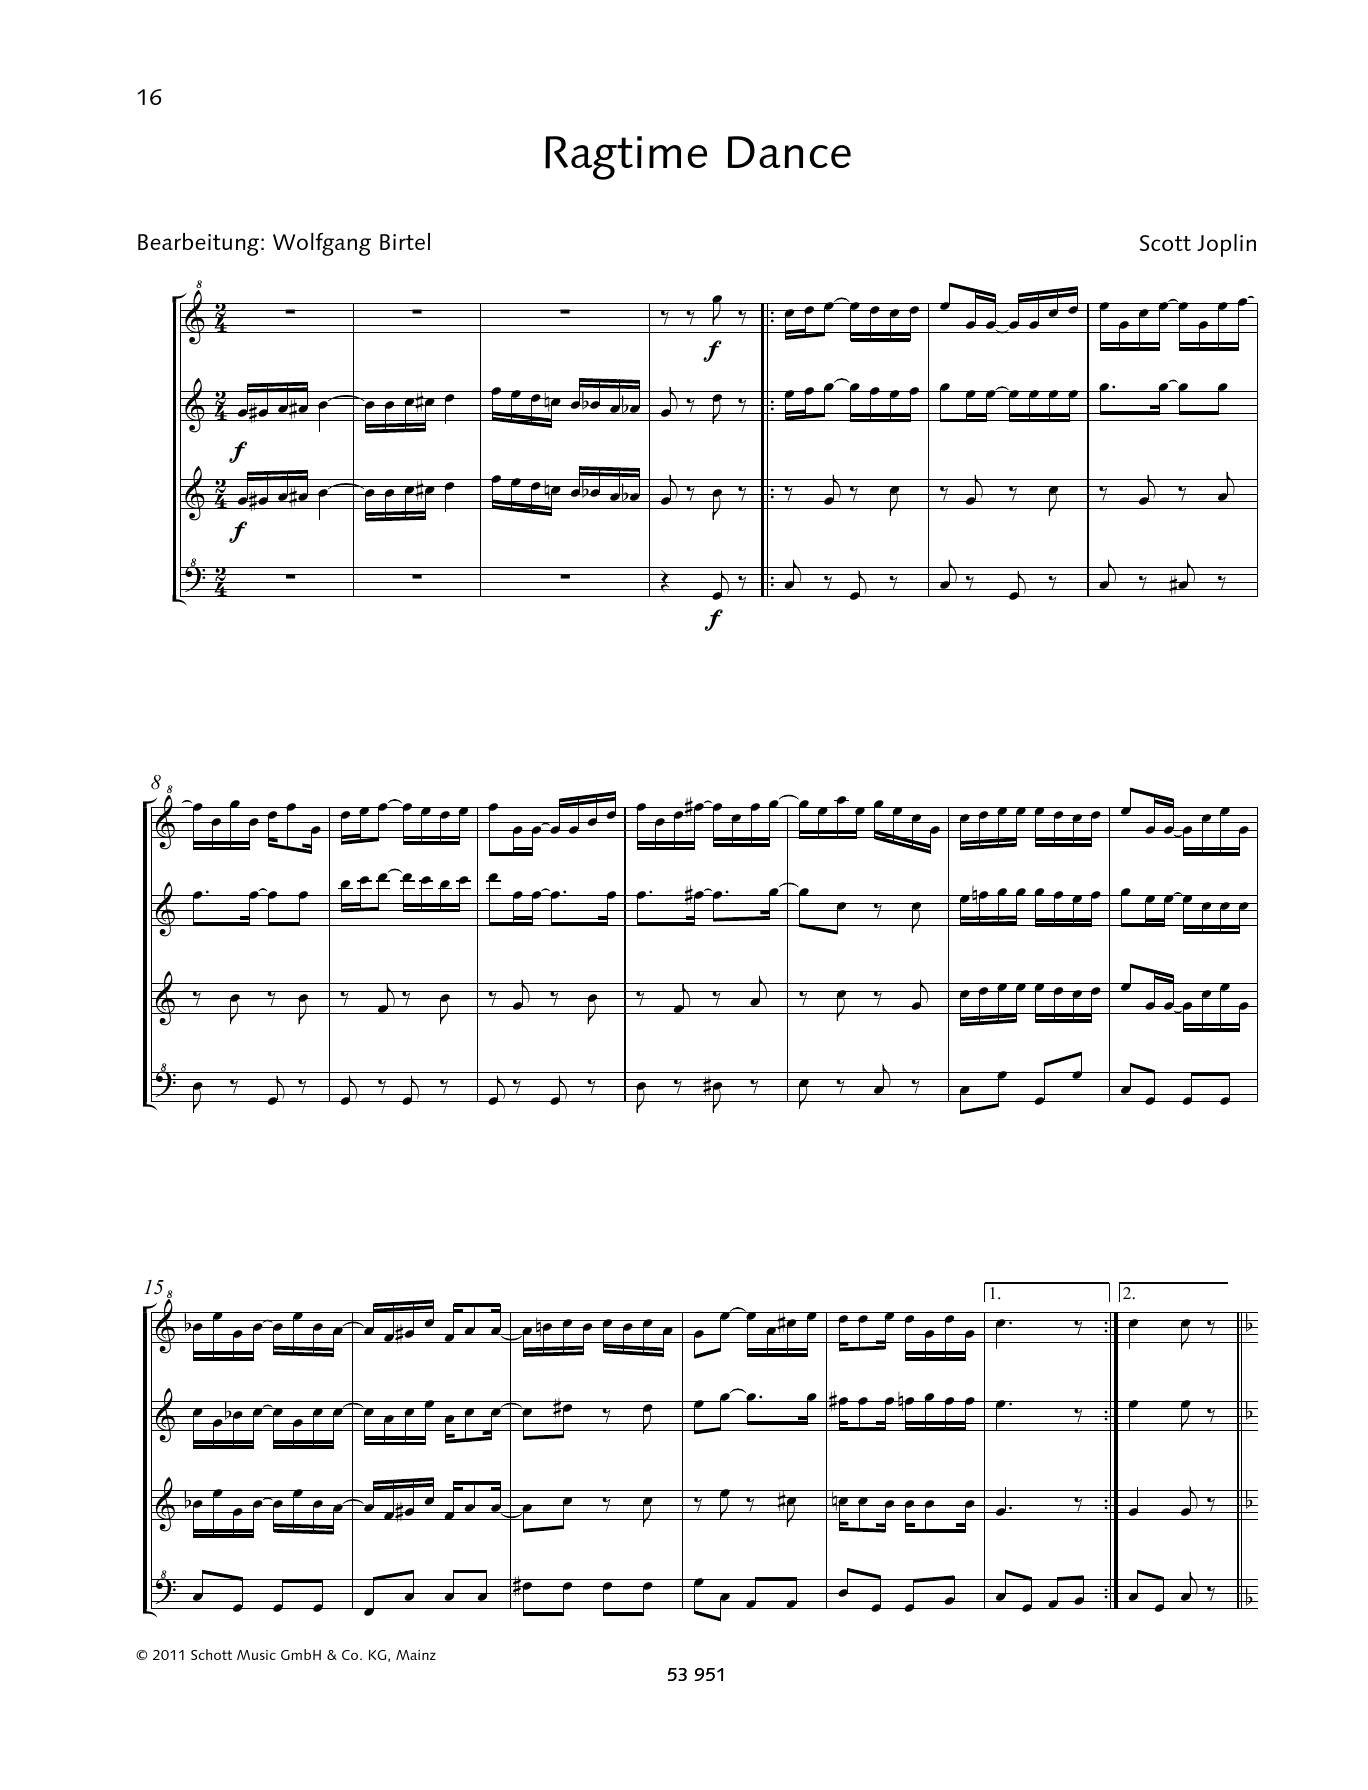 Scott Joplin Ragtime Dance Sheet Music Notes & Chords for Woodwind Ensemble - Download or Print PDF